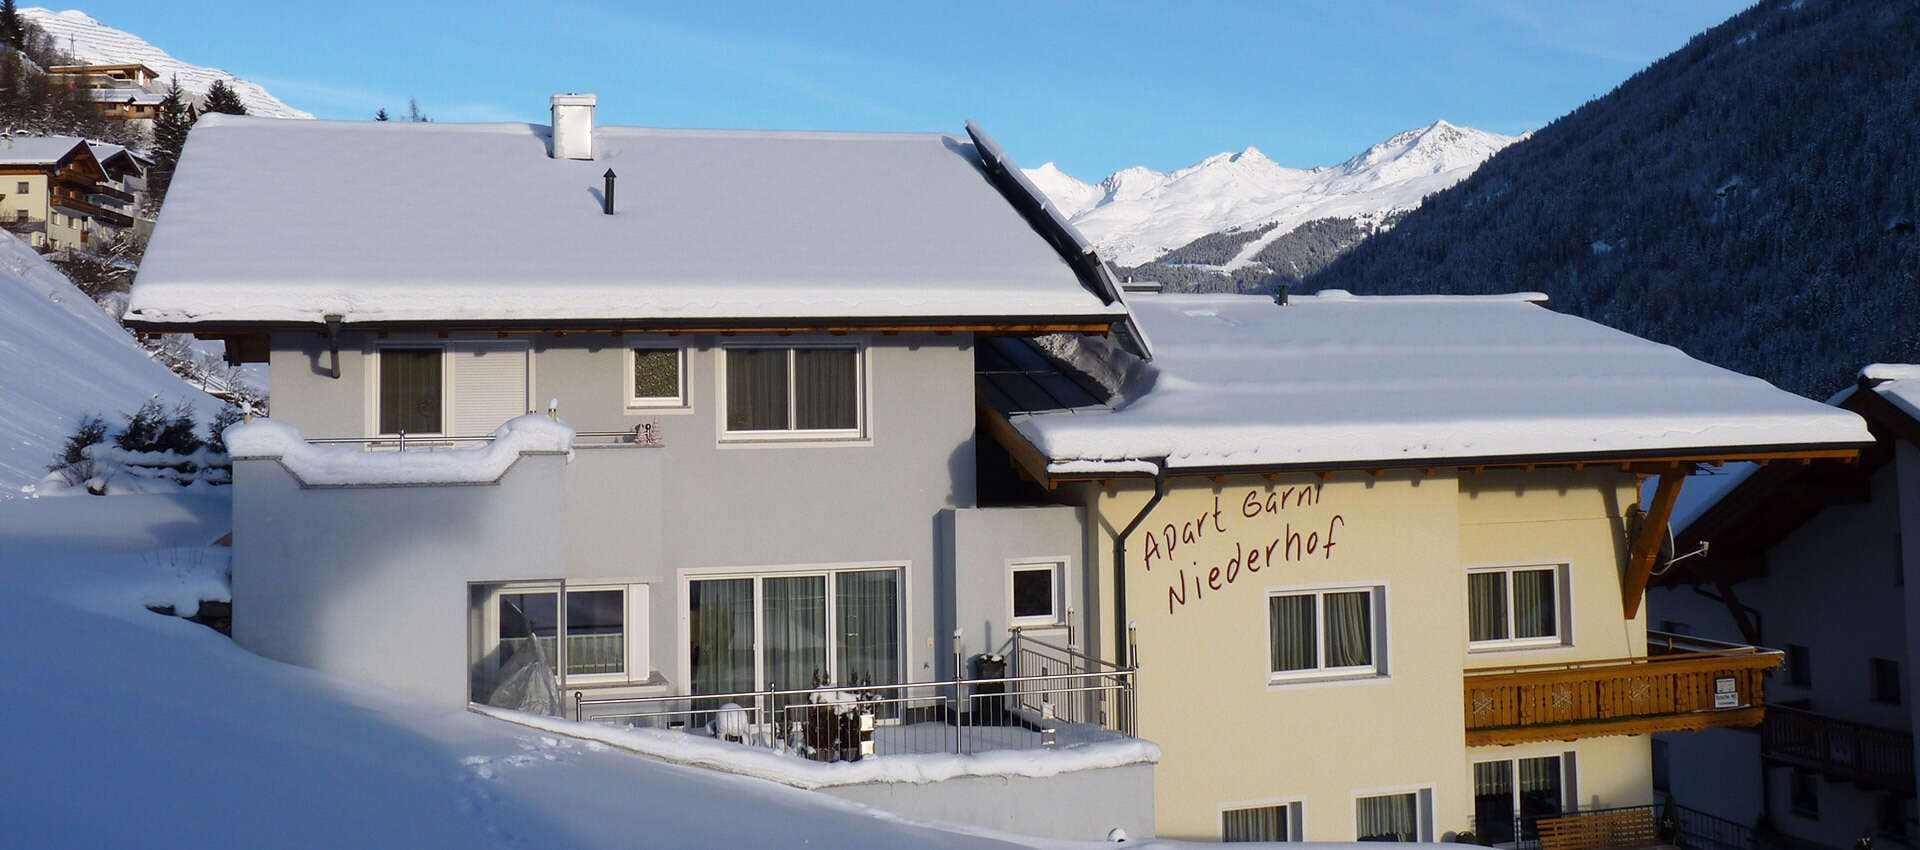 Apart Garni Niederhof Ferienhaus Kappl Tirol